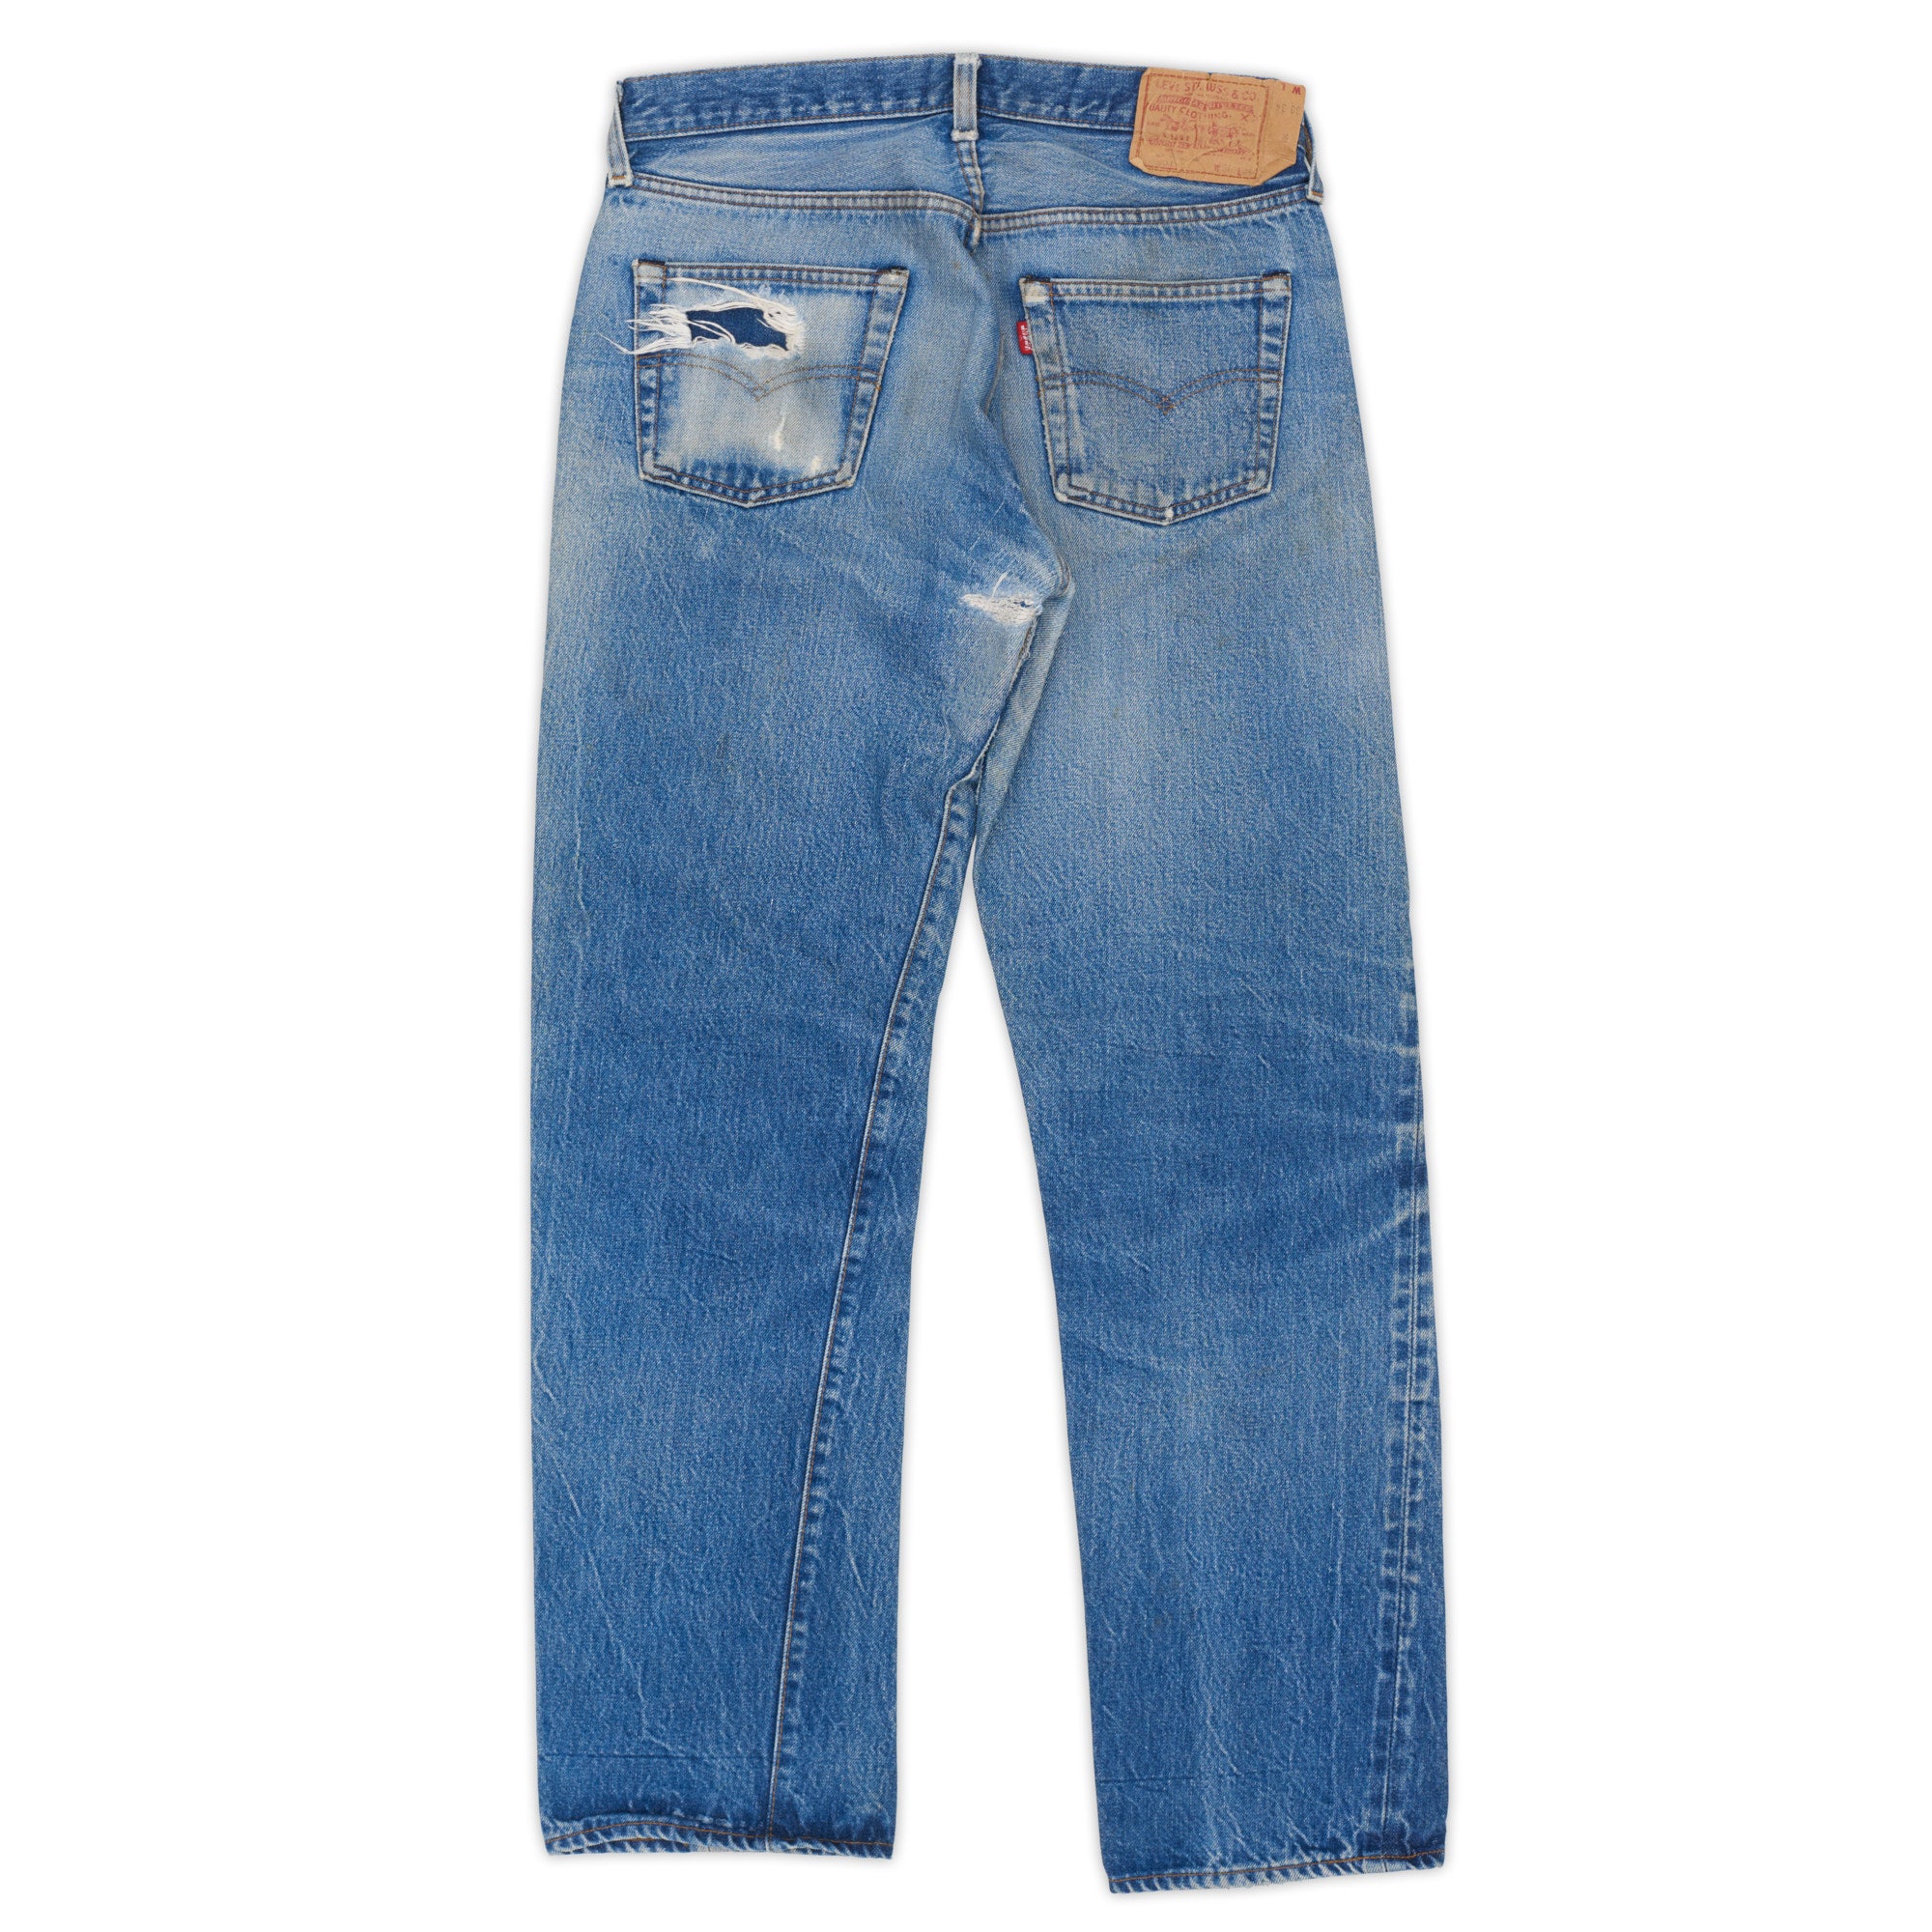 Vintage LEVI'S 501 USA  Selvedge Slim Jeans Pants W33 L34 #524 Blue Tacks